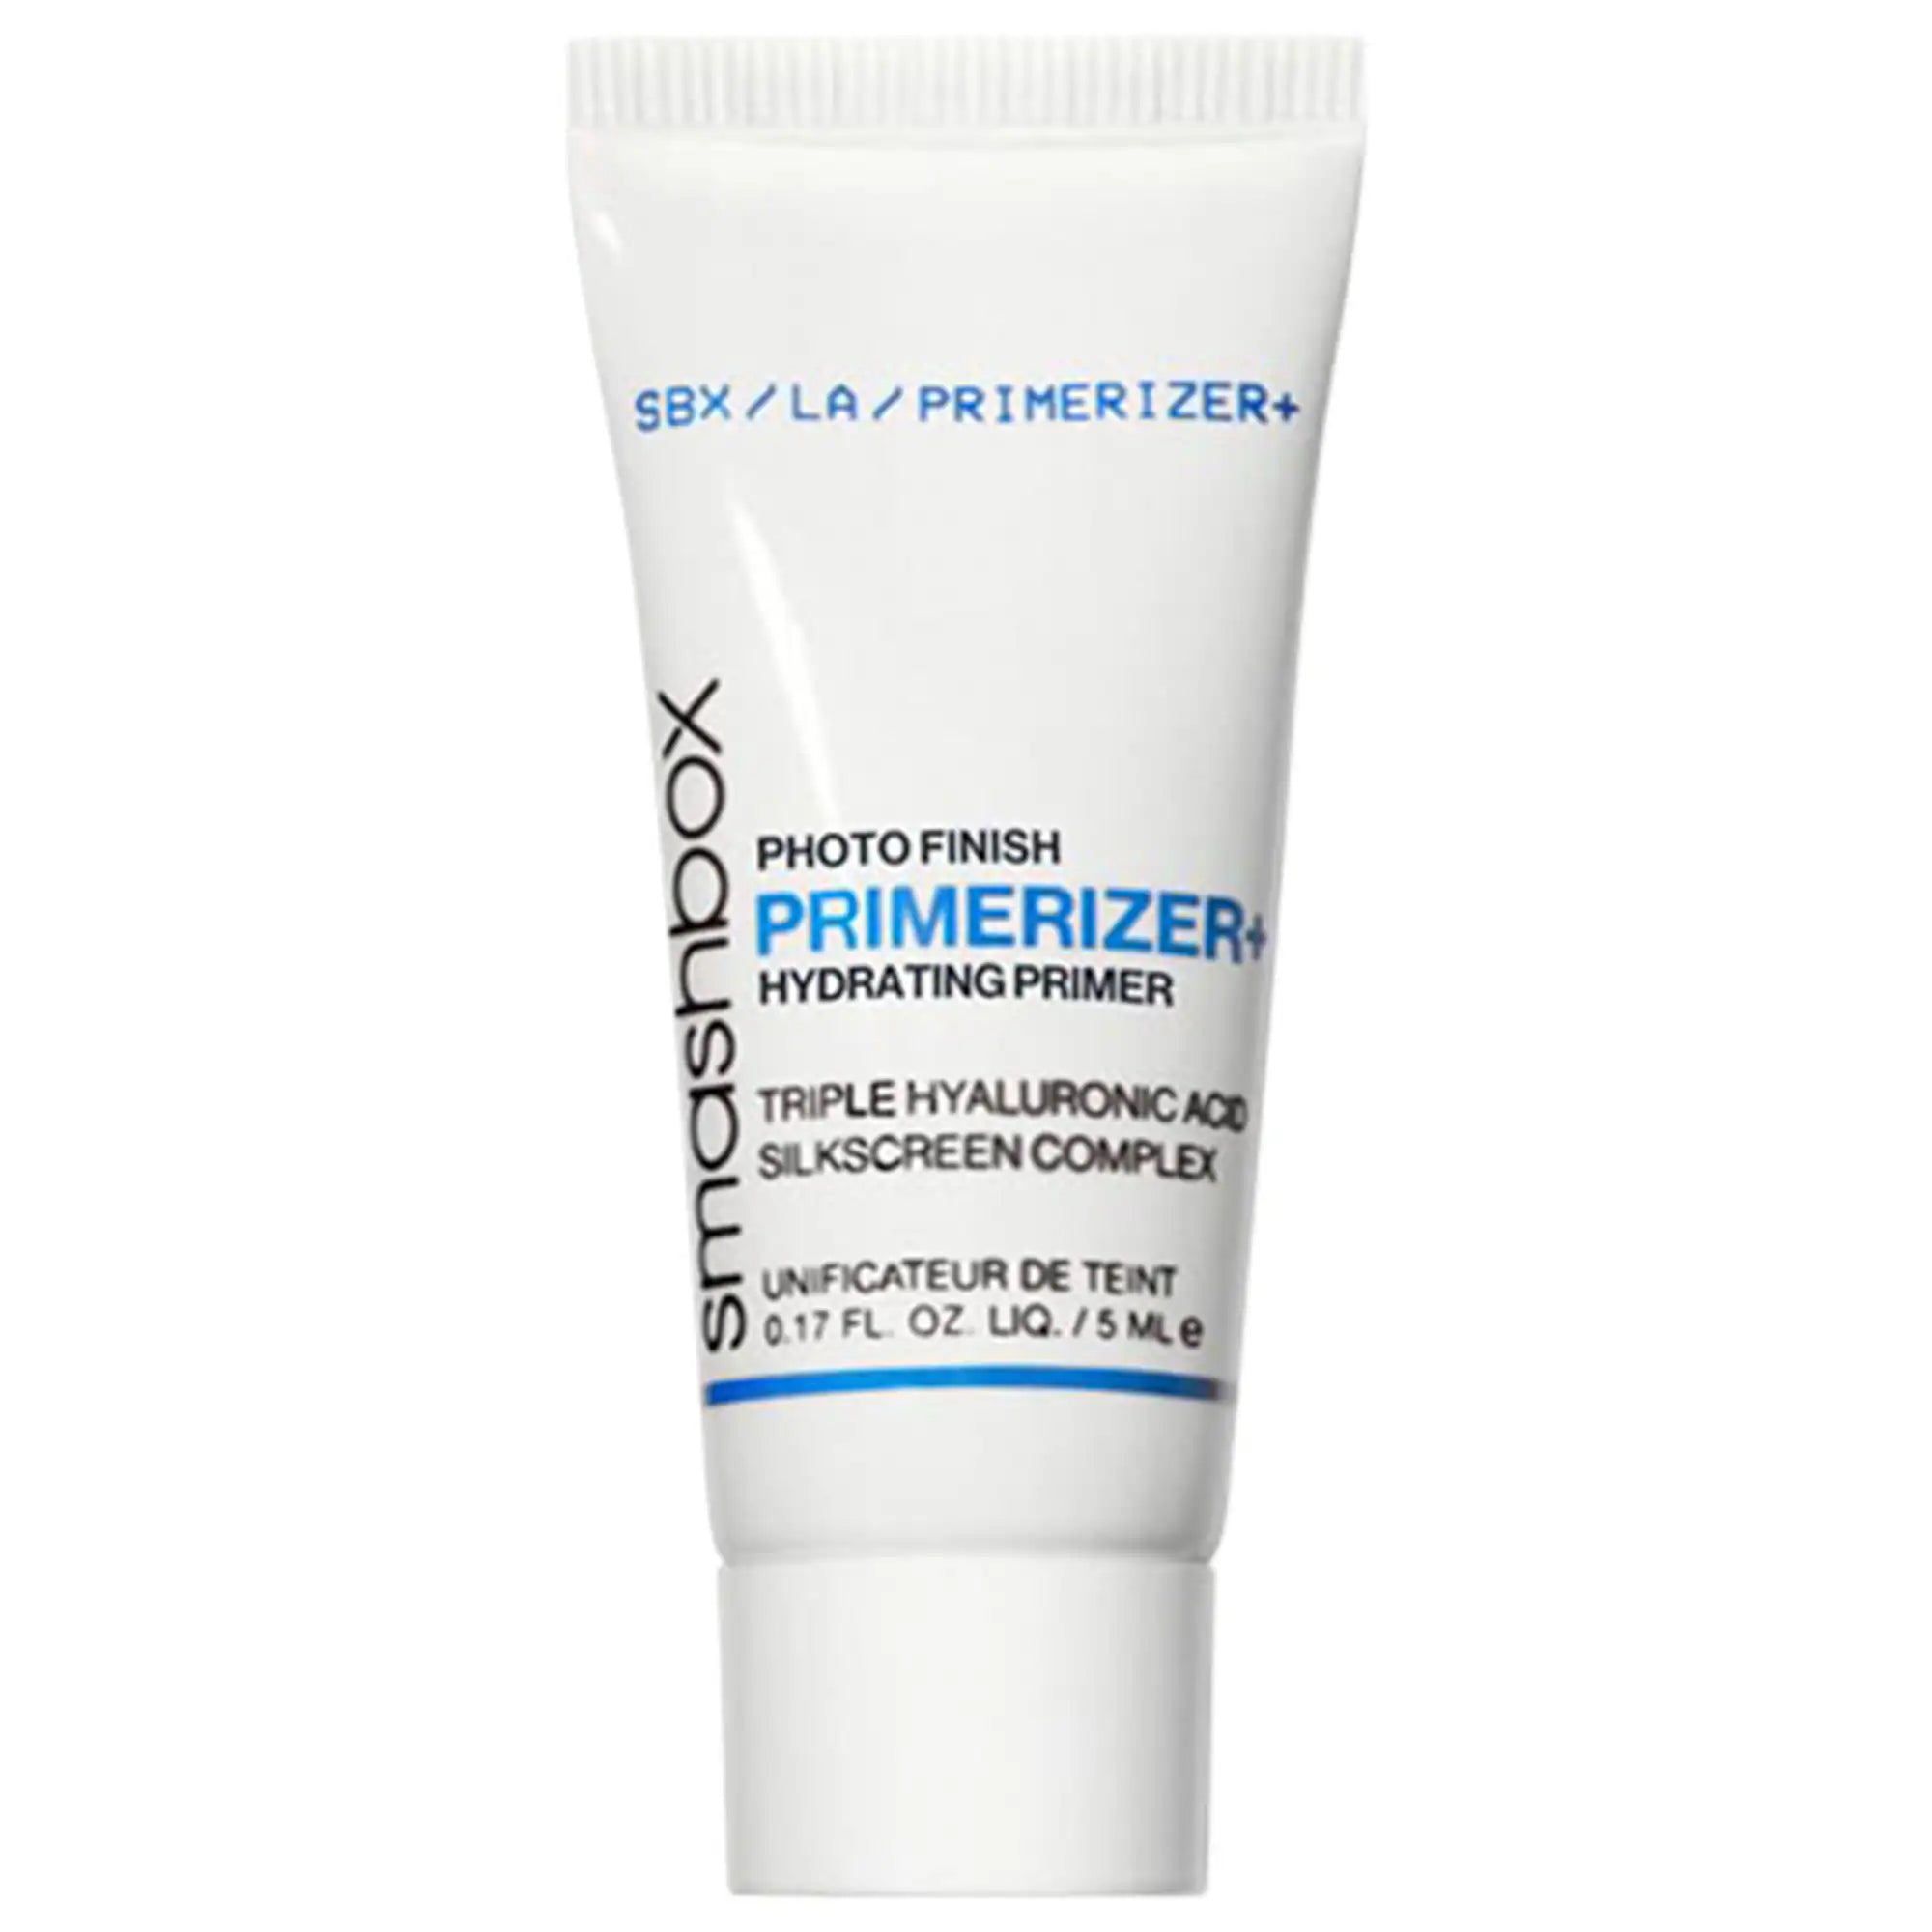 Smashbox Photo Finish Primerizer Hydrating Primer Trial Size - 5 ml